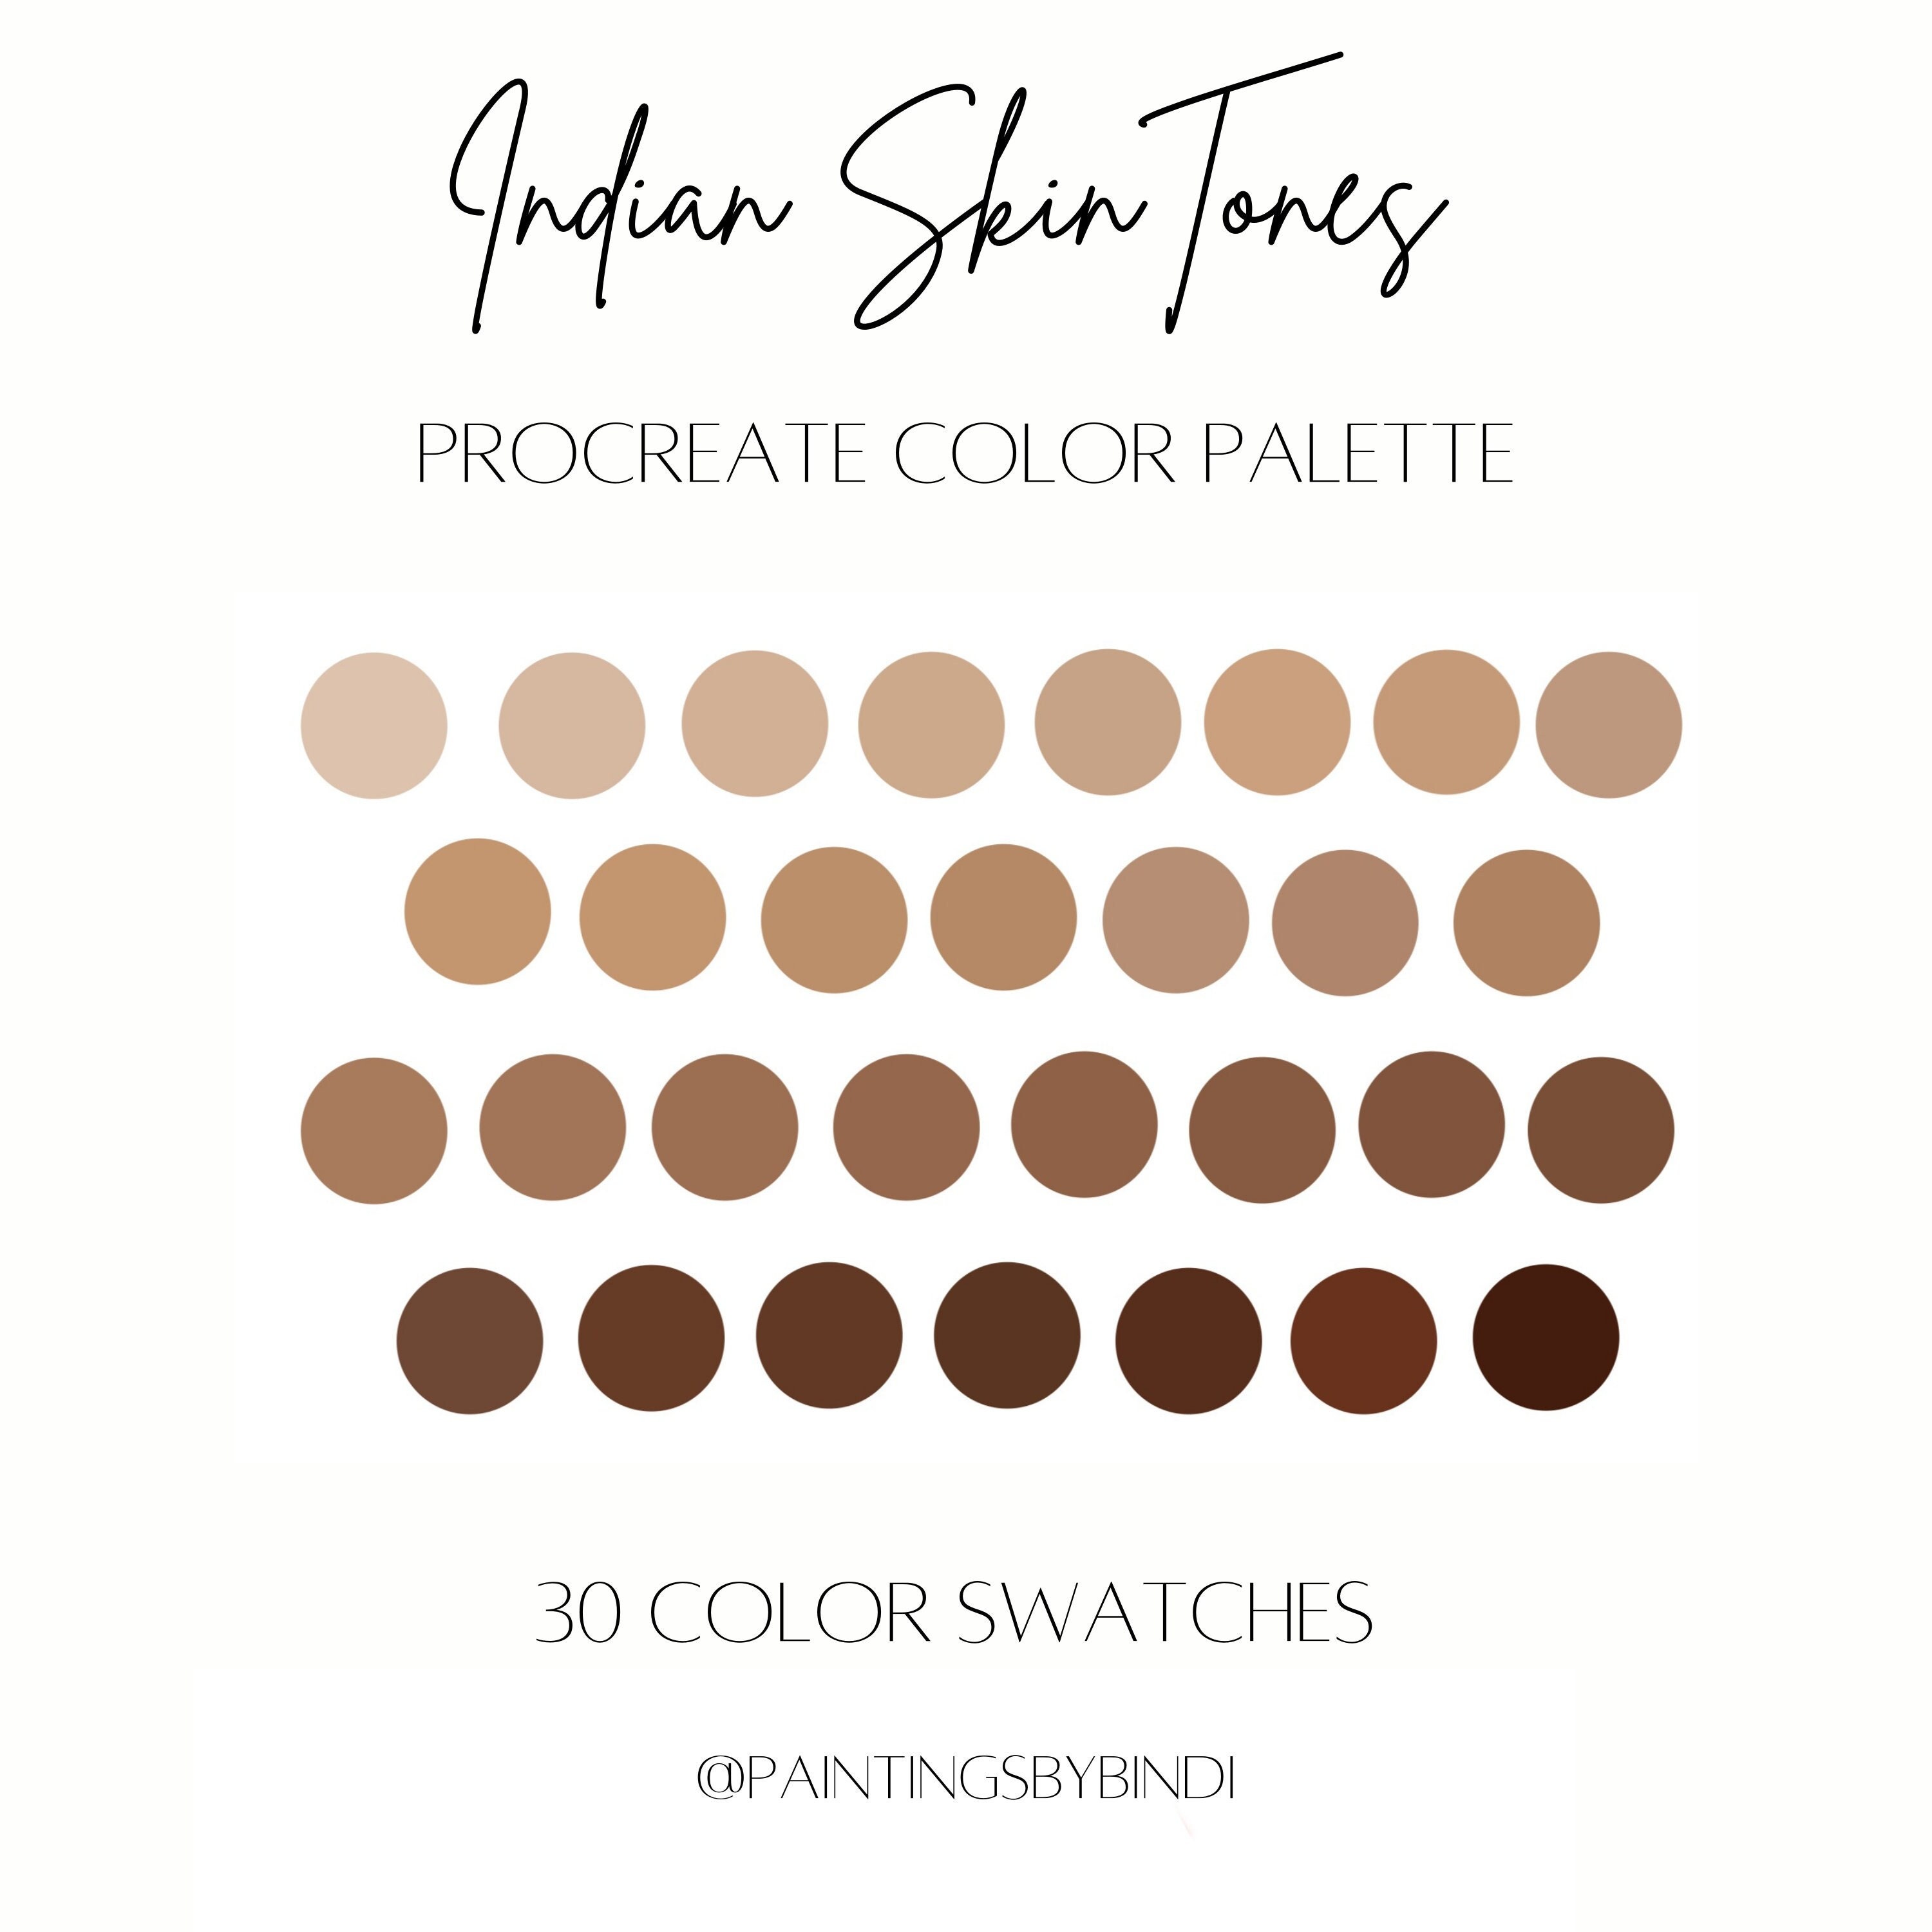 Indian Skin Tones Procreate Color Palette 30 Color -